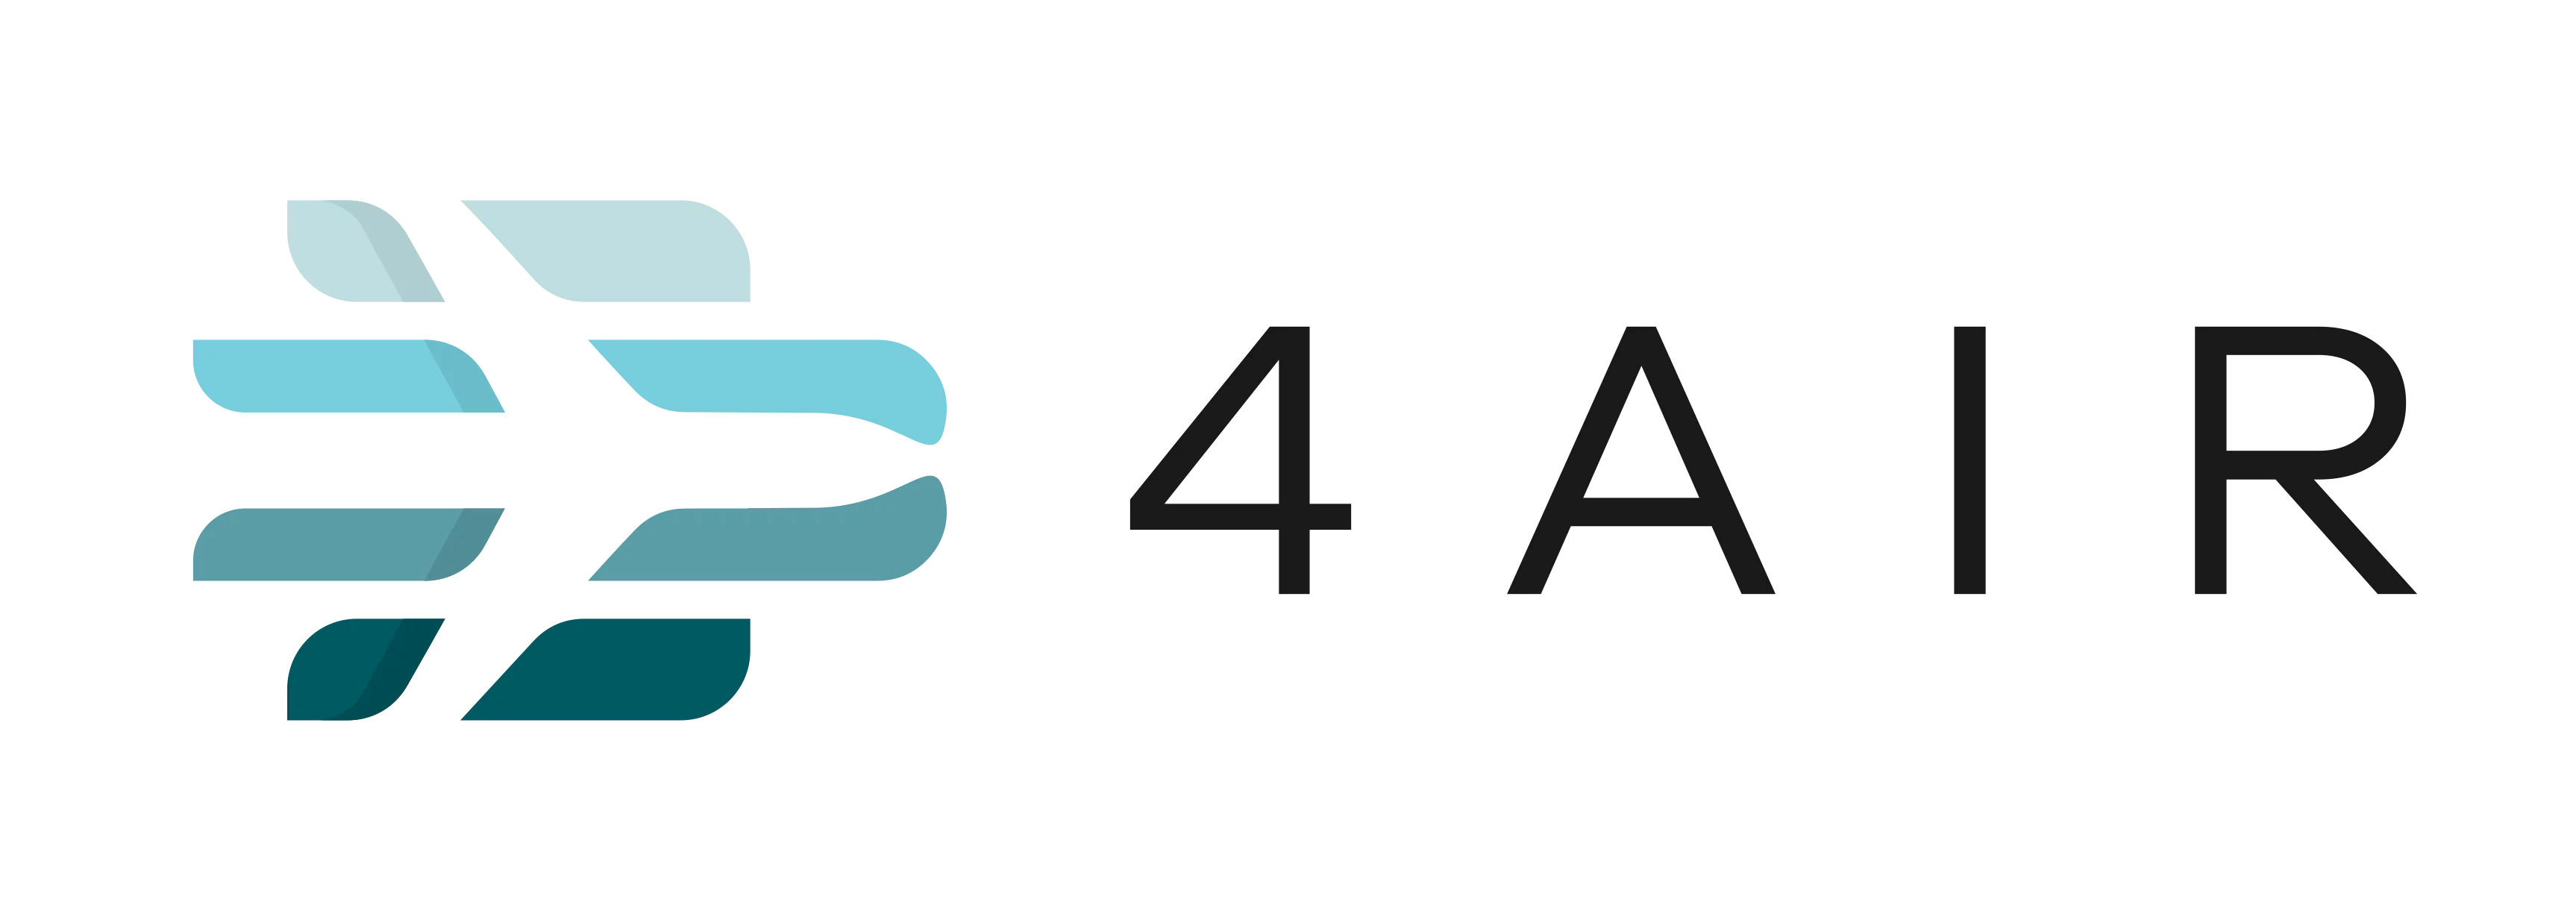 Logo for company 4Air